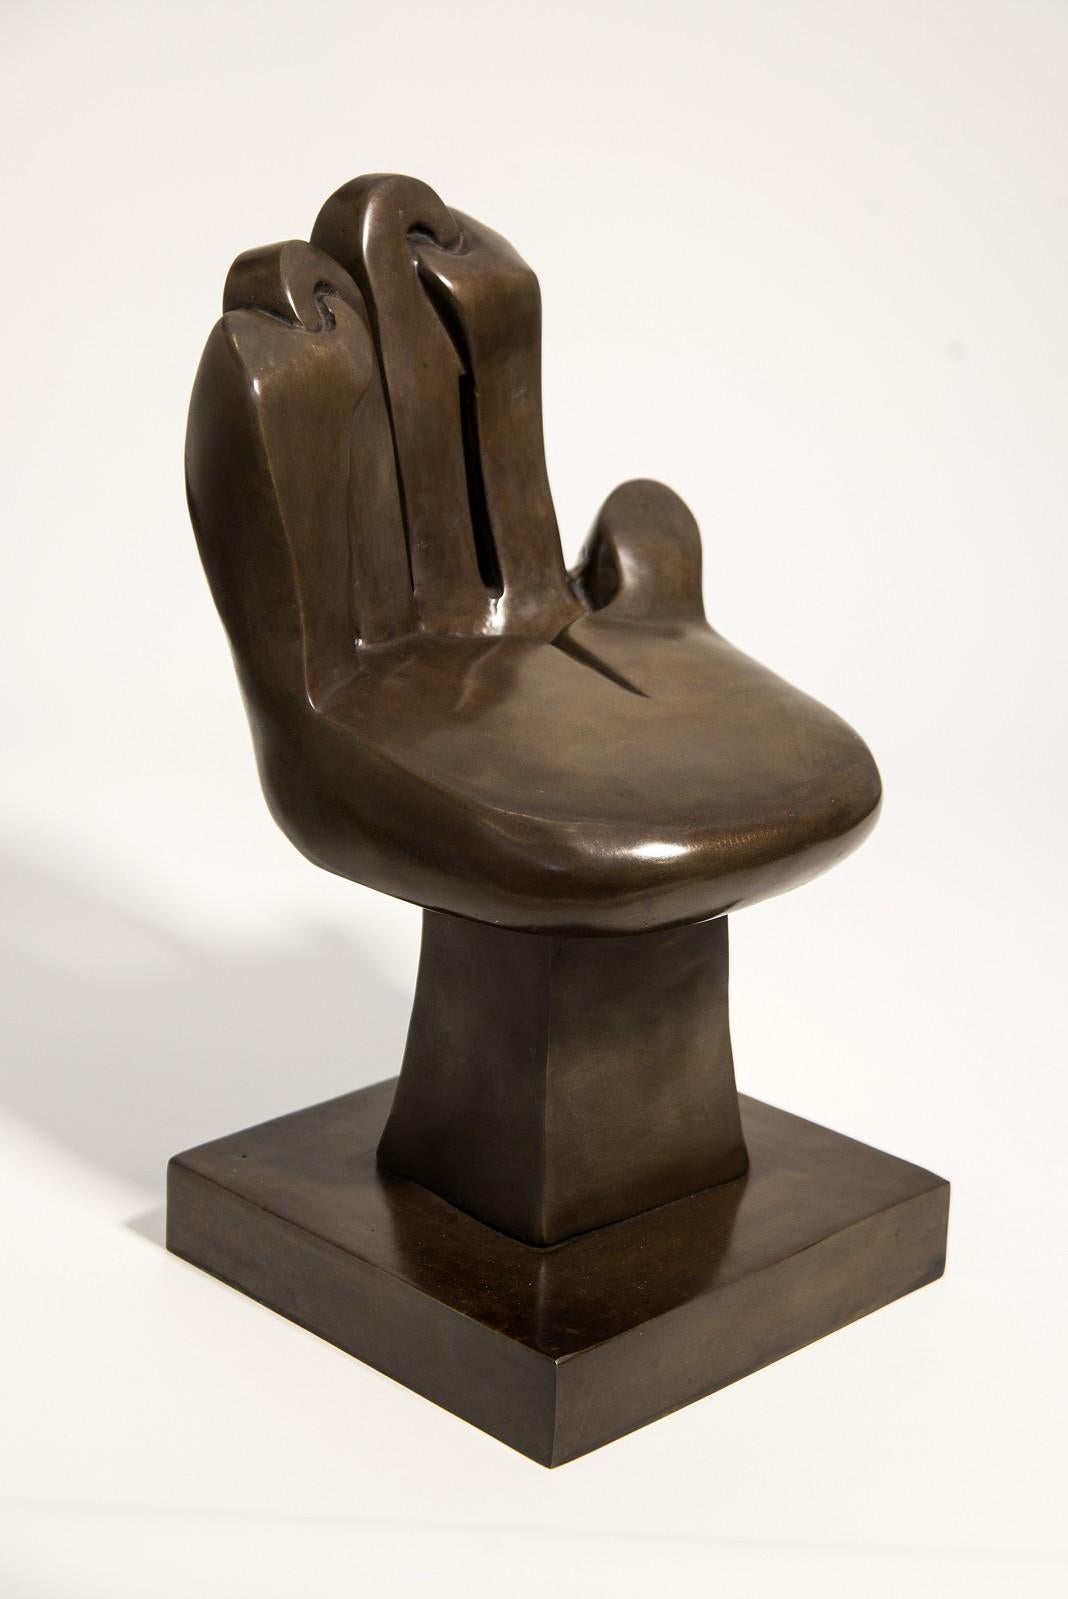 Small Chair (Hand) - bold, surrealist, hand, figurative bronze sculpture - Sculpture by Sorel Etrog